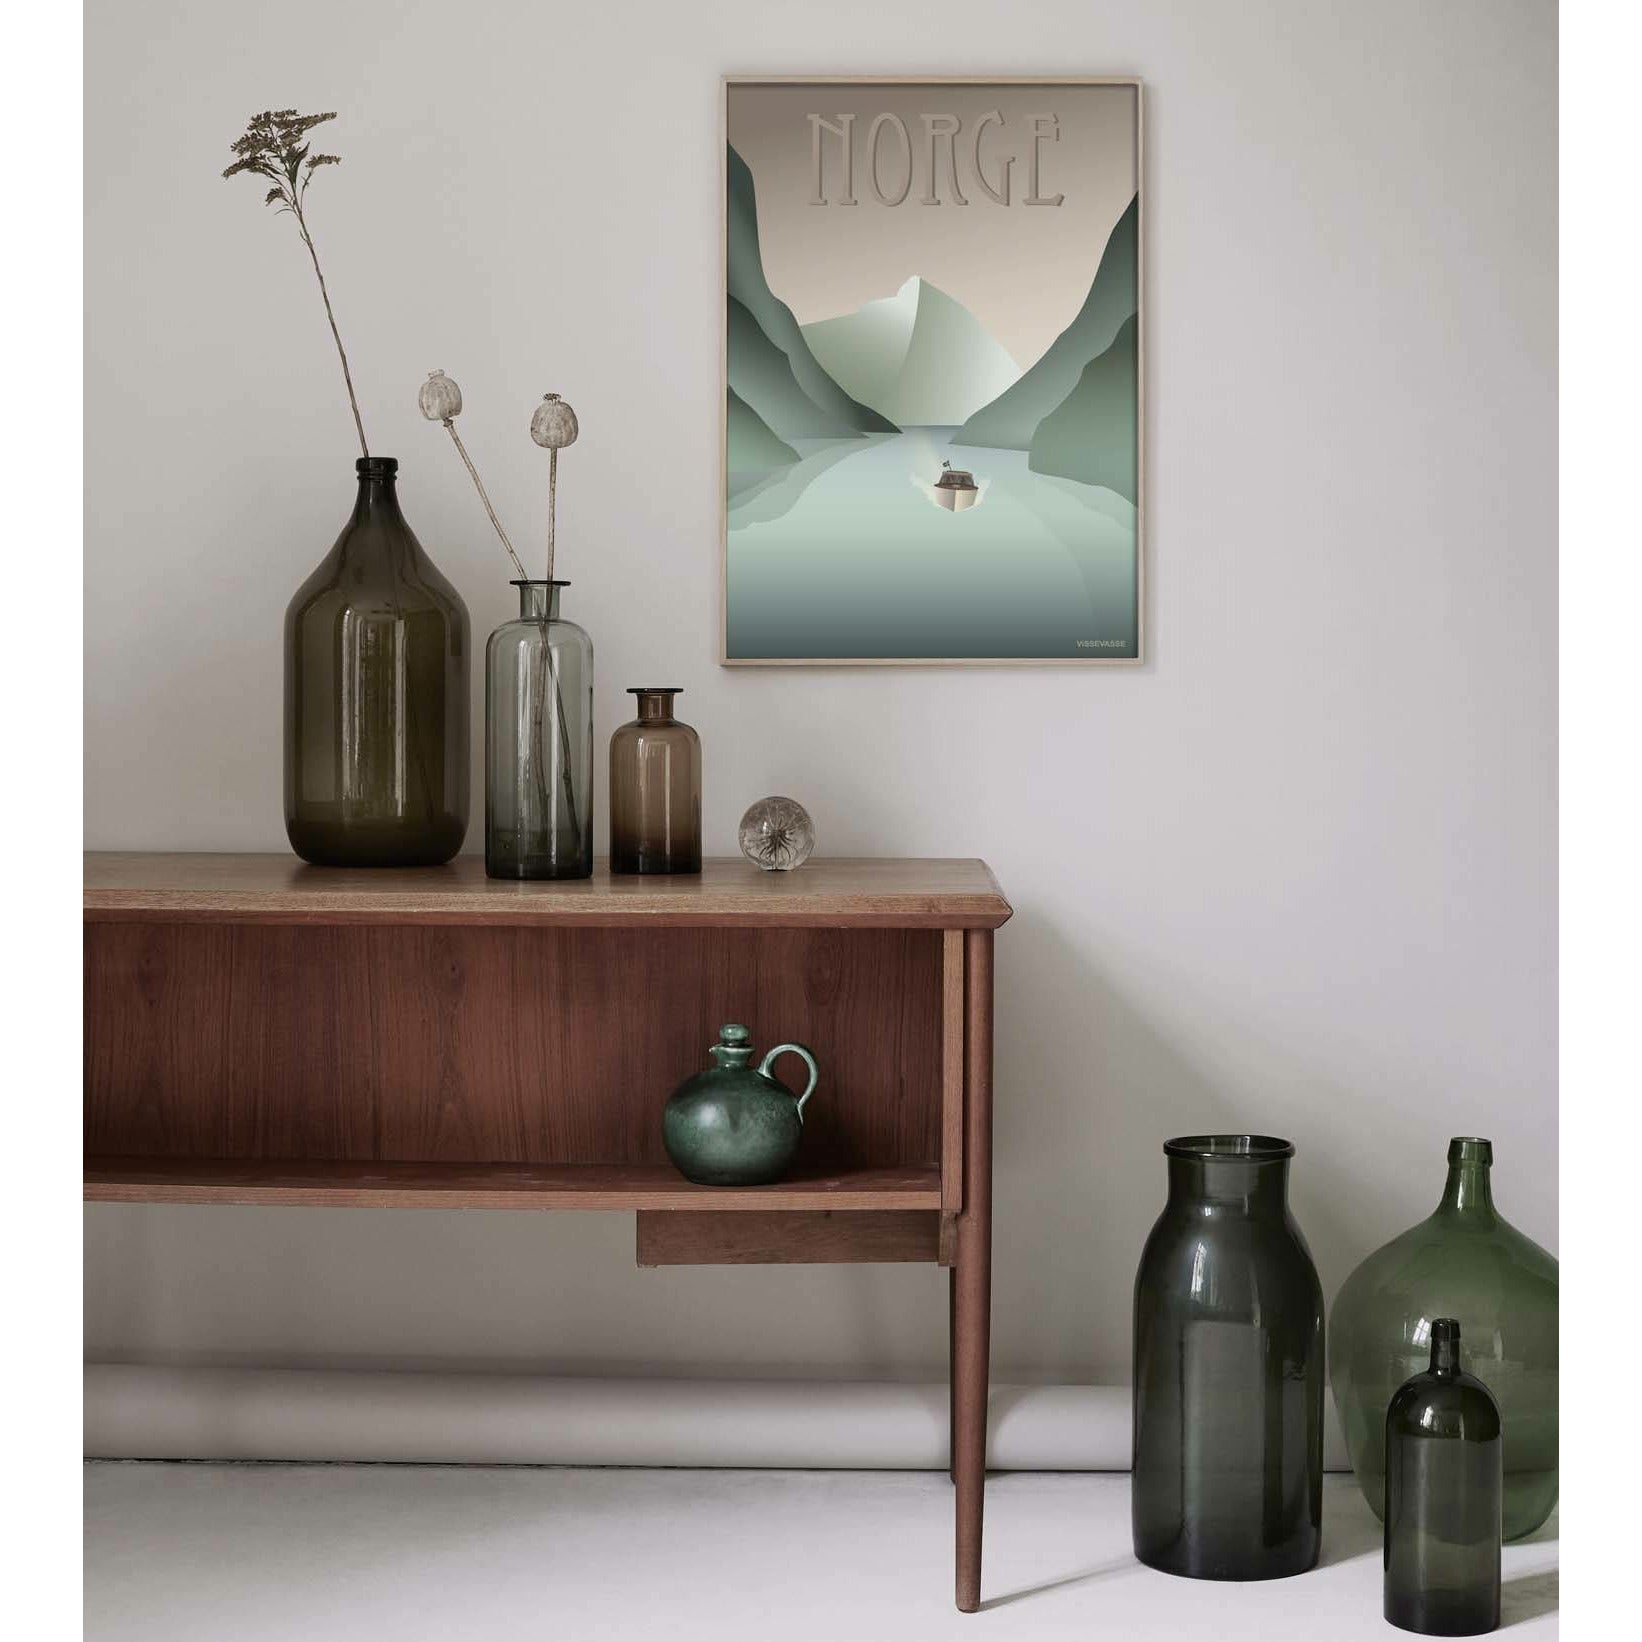 Vissevasse Norge Fjord Poster, 70x100 cm